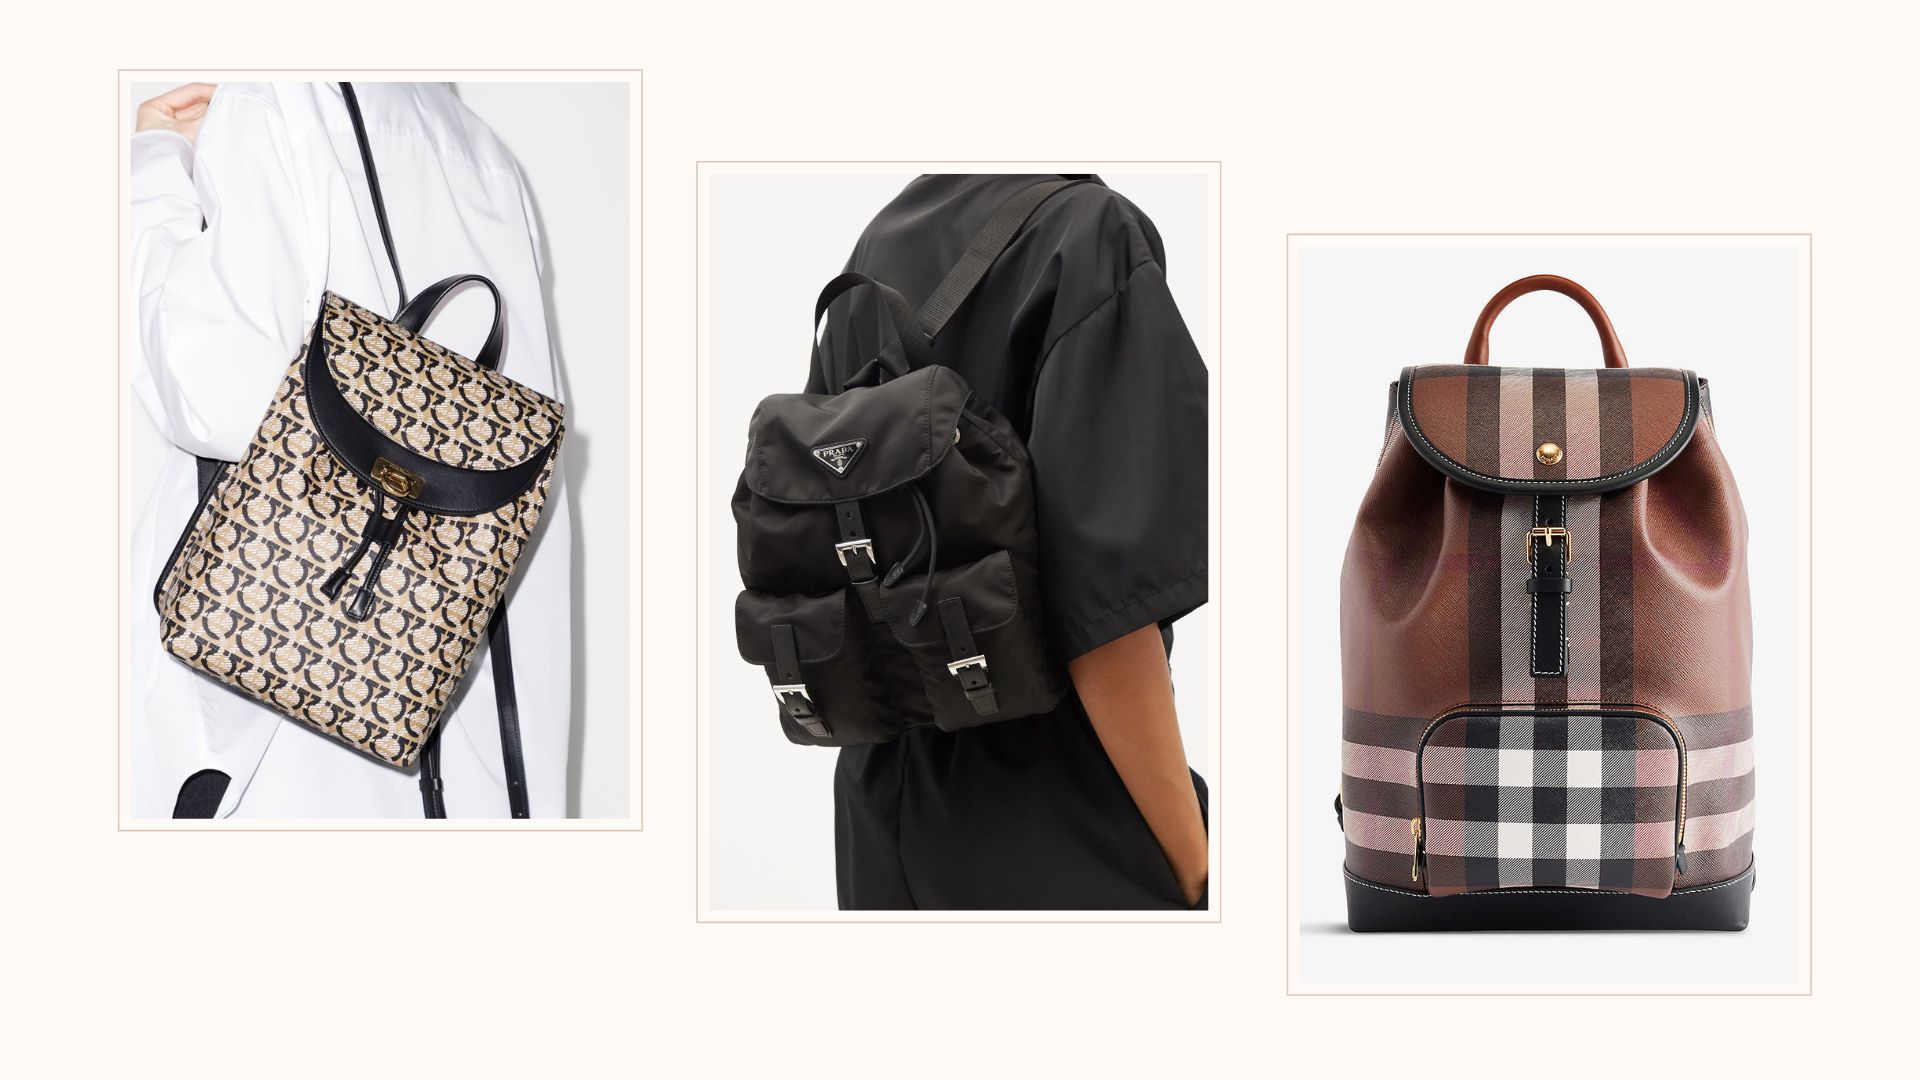 Best designer backpacks for women selected by an expert